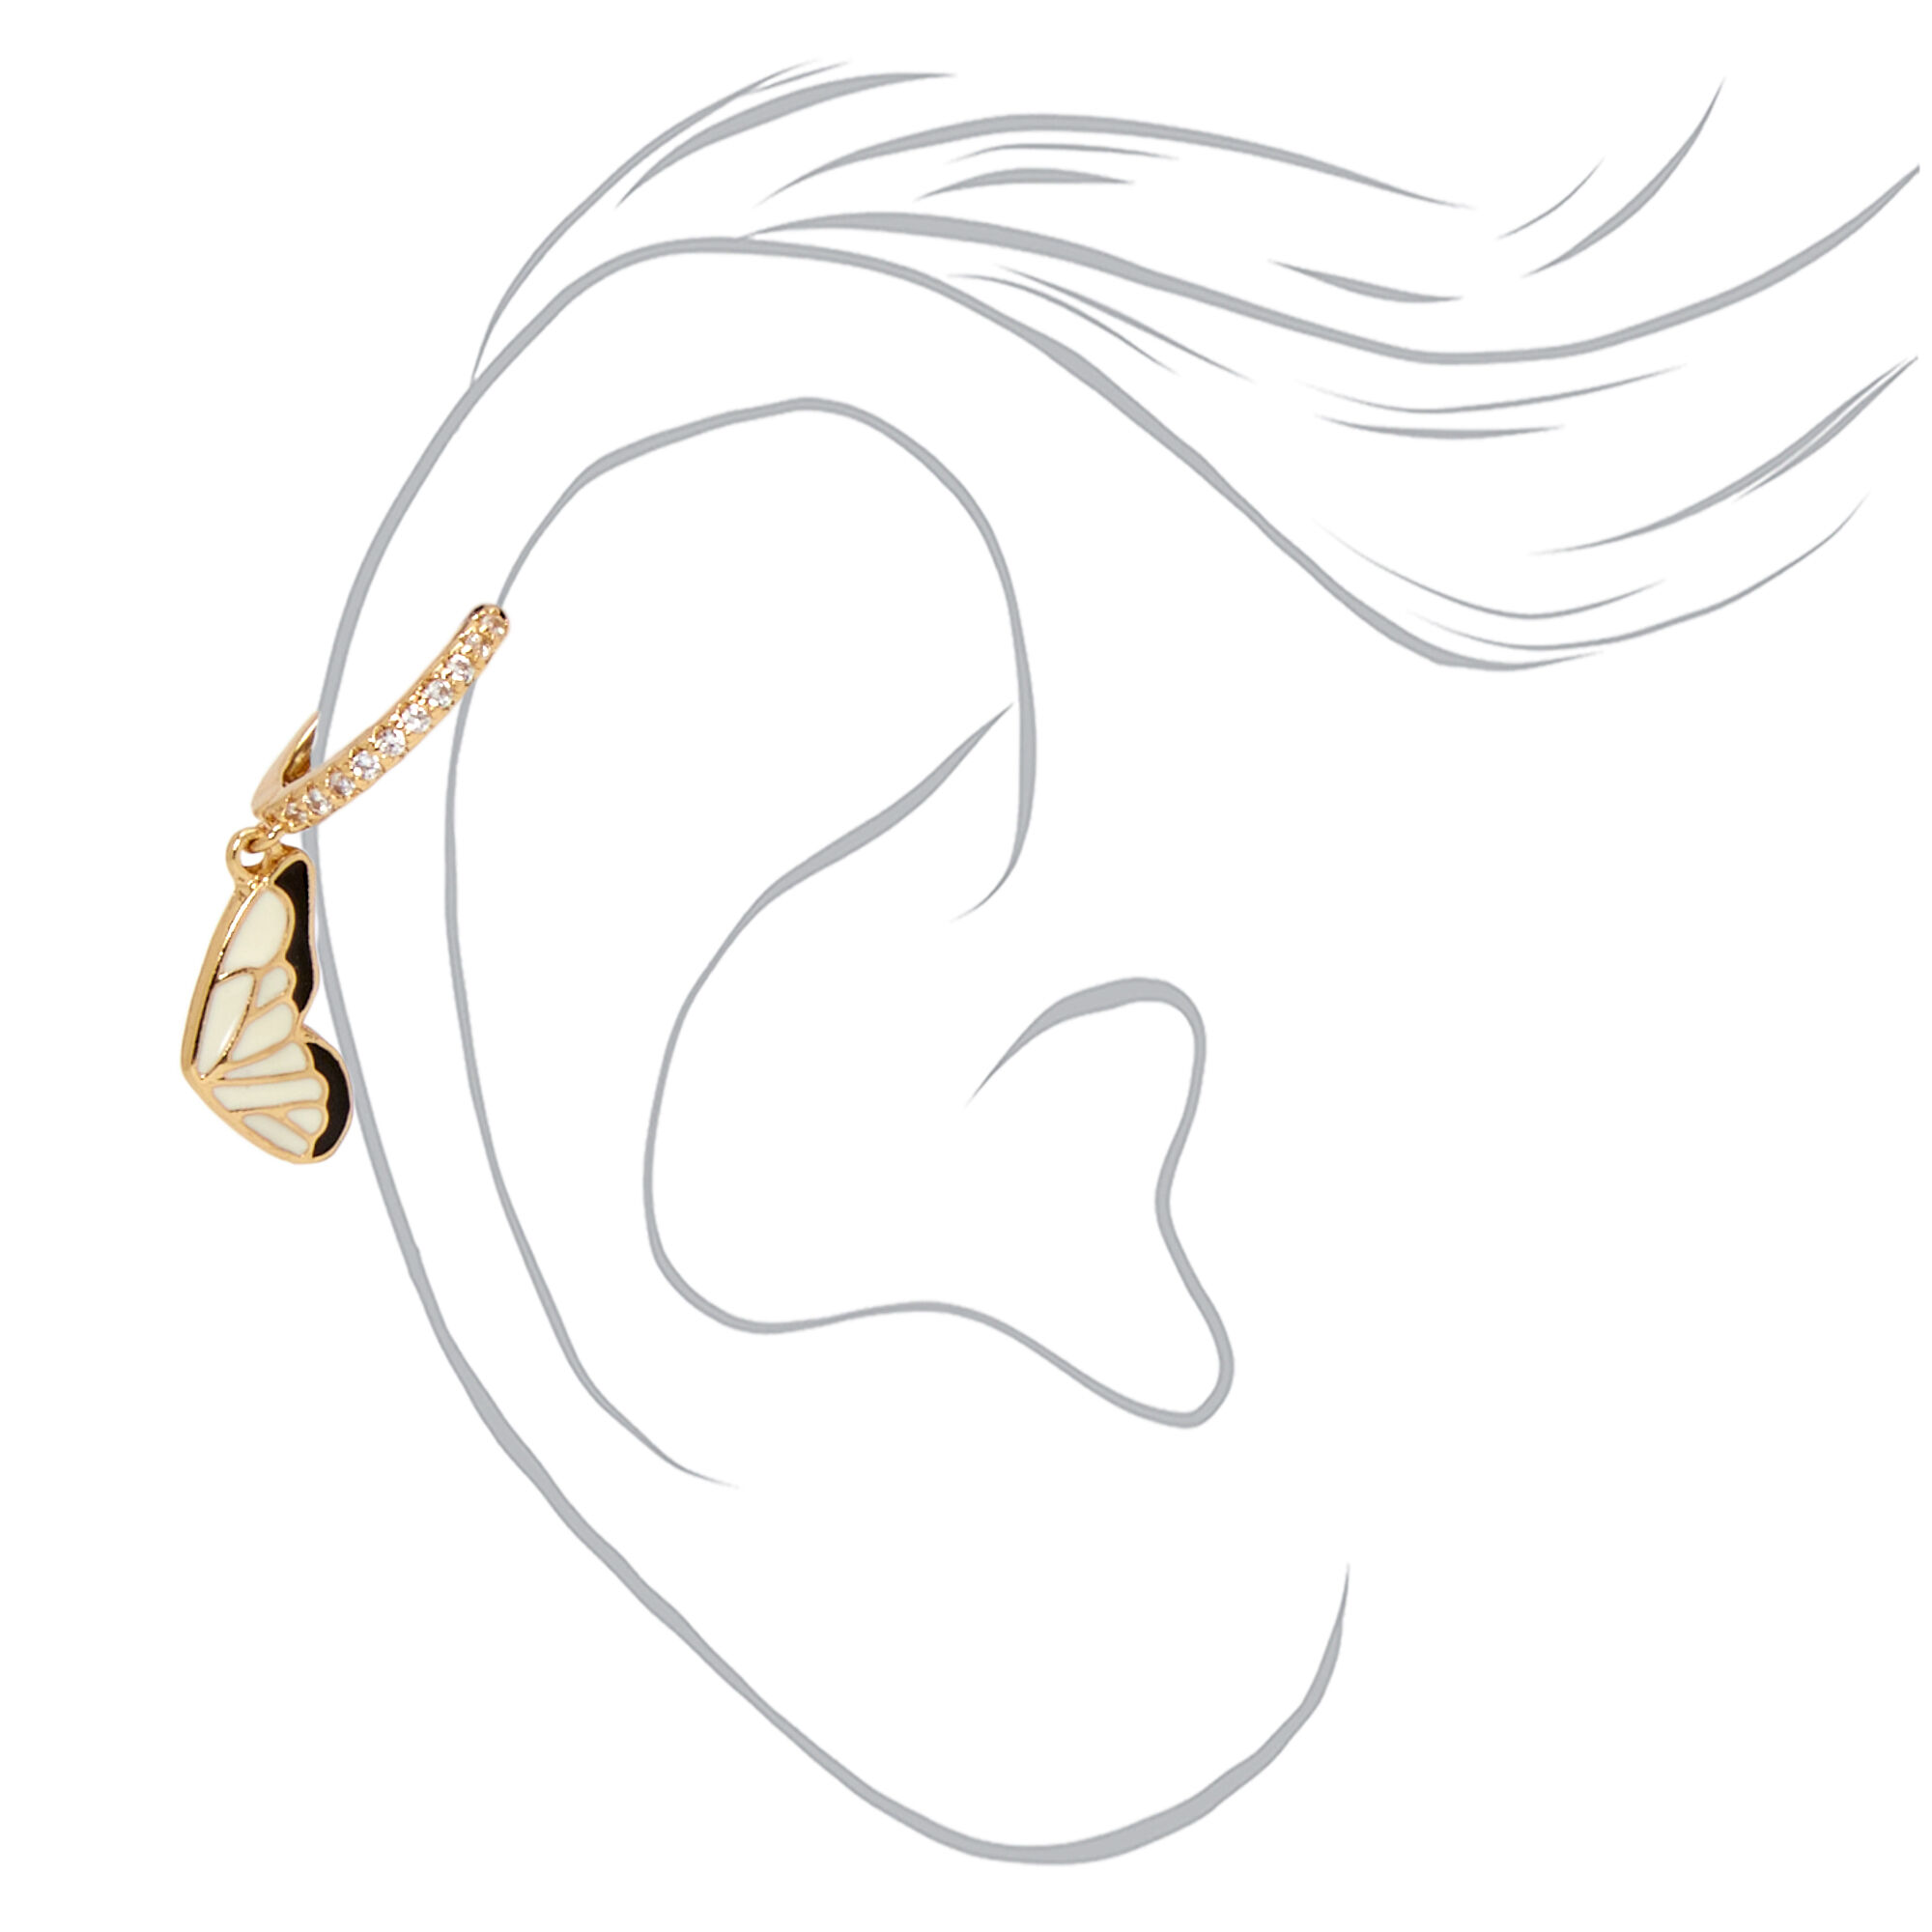 Gold Tragus Earring, Helix Earring, Cartilage Earring, Gold Cartilage Hoop,  Foreword Helix, Nose Ring, Nose Hoop, Helix Piercing, Half Moon - Etsy |  Silver nose ring, Nose ring, Gold nose hoop